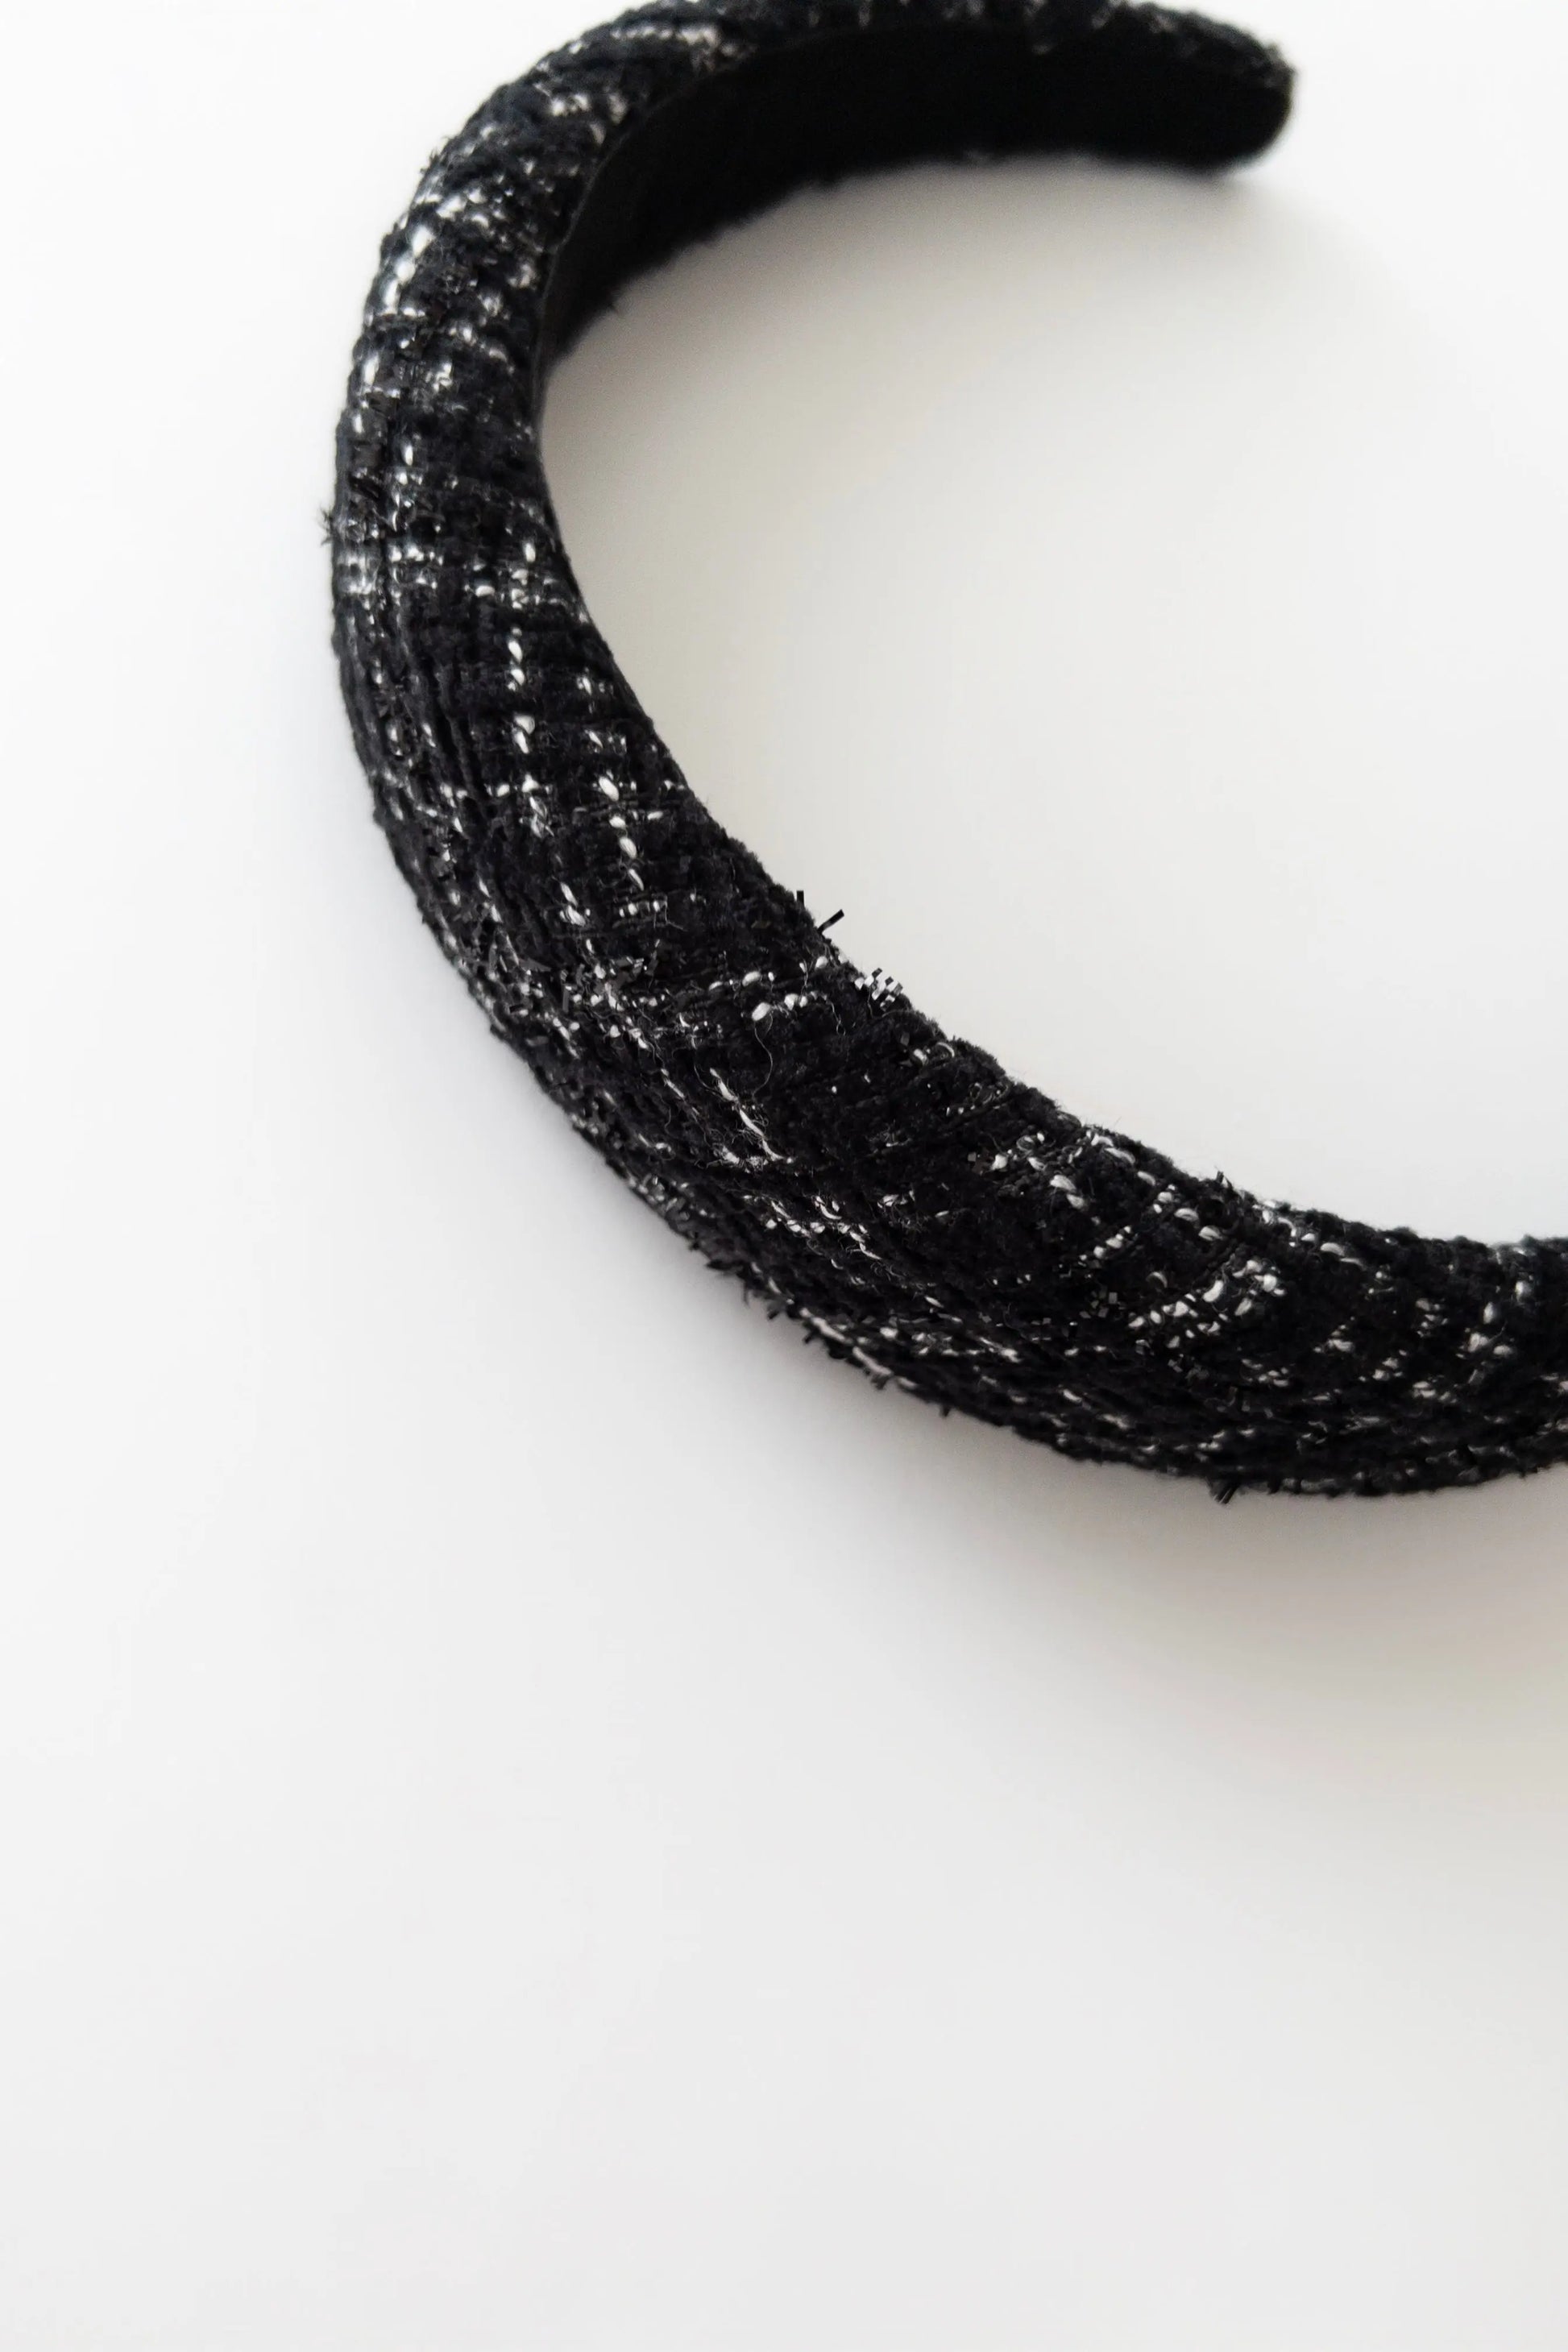 The Tiny Details Astoria Tweed Headband